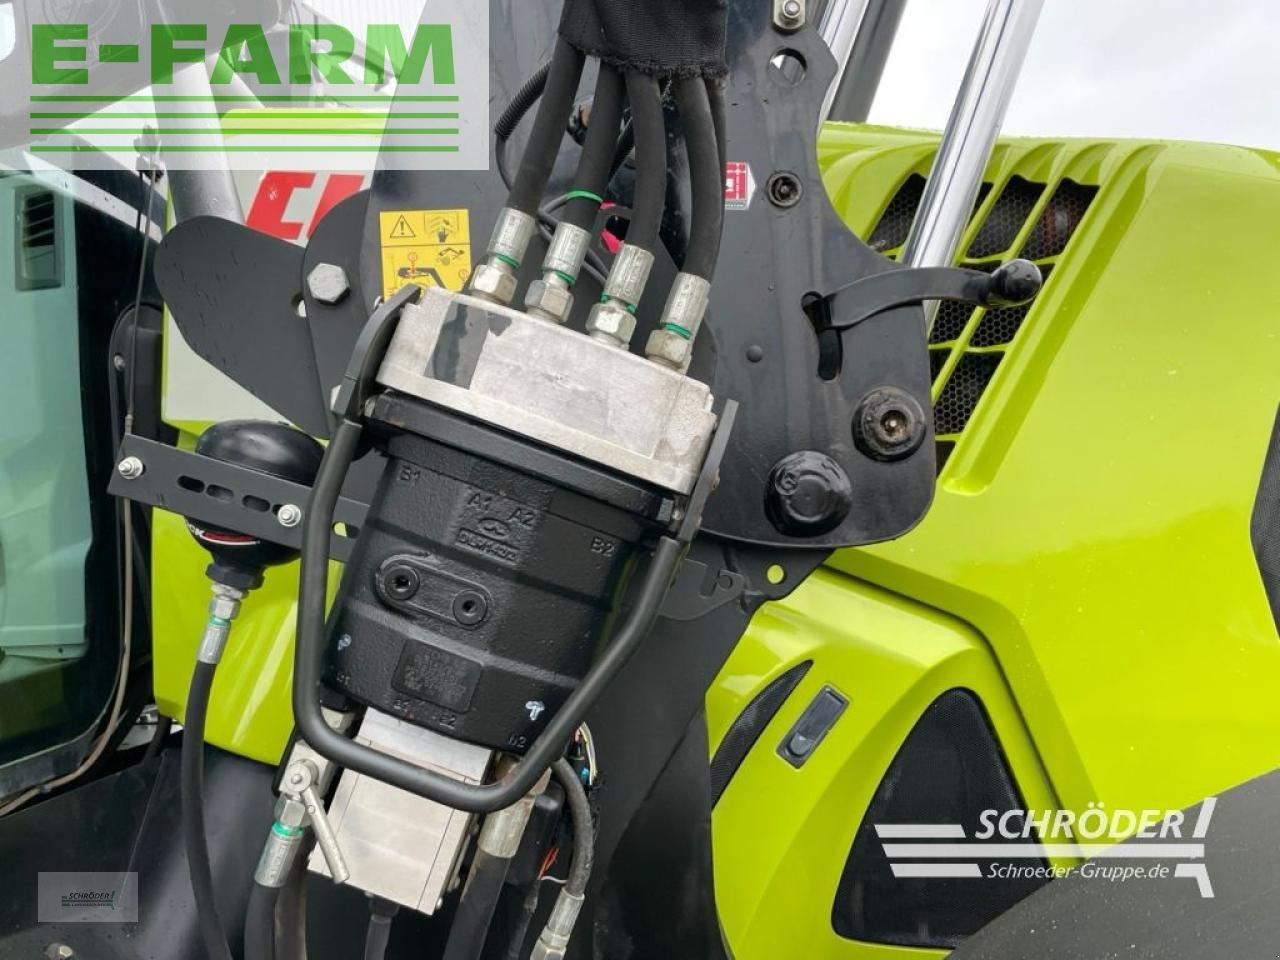 Farm tractor CLAAS axion 810 cmatic rtk